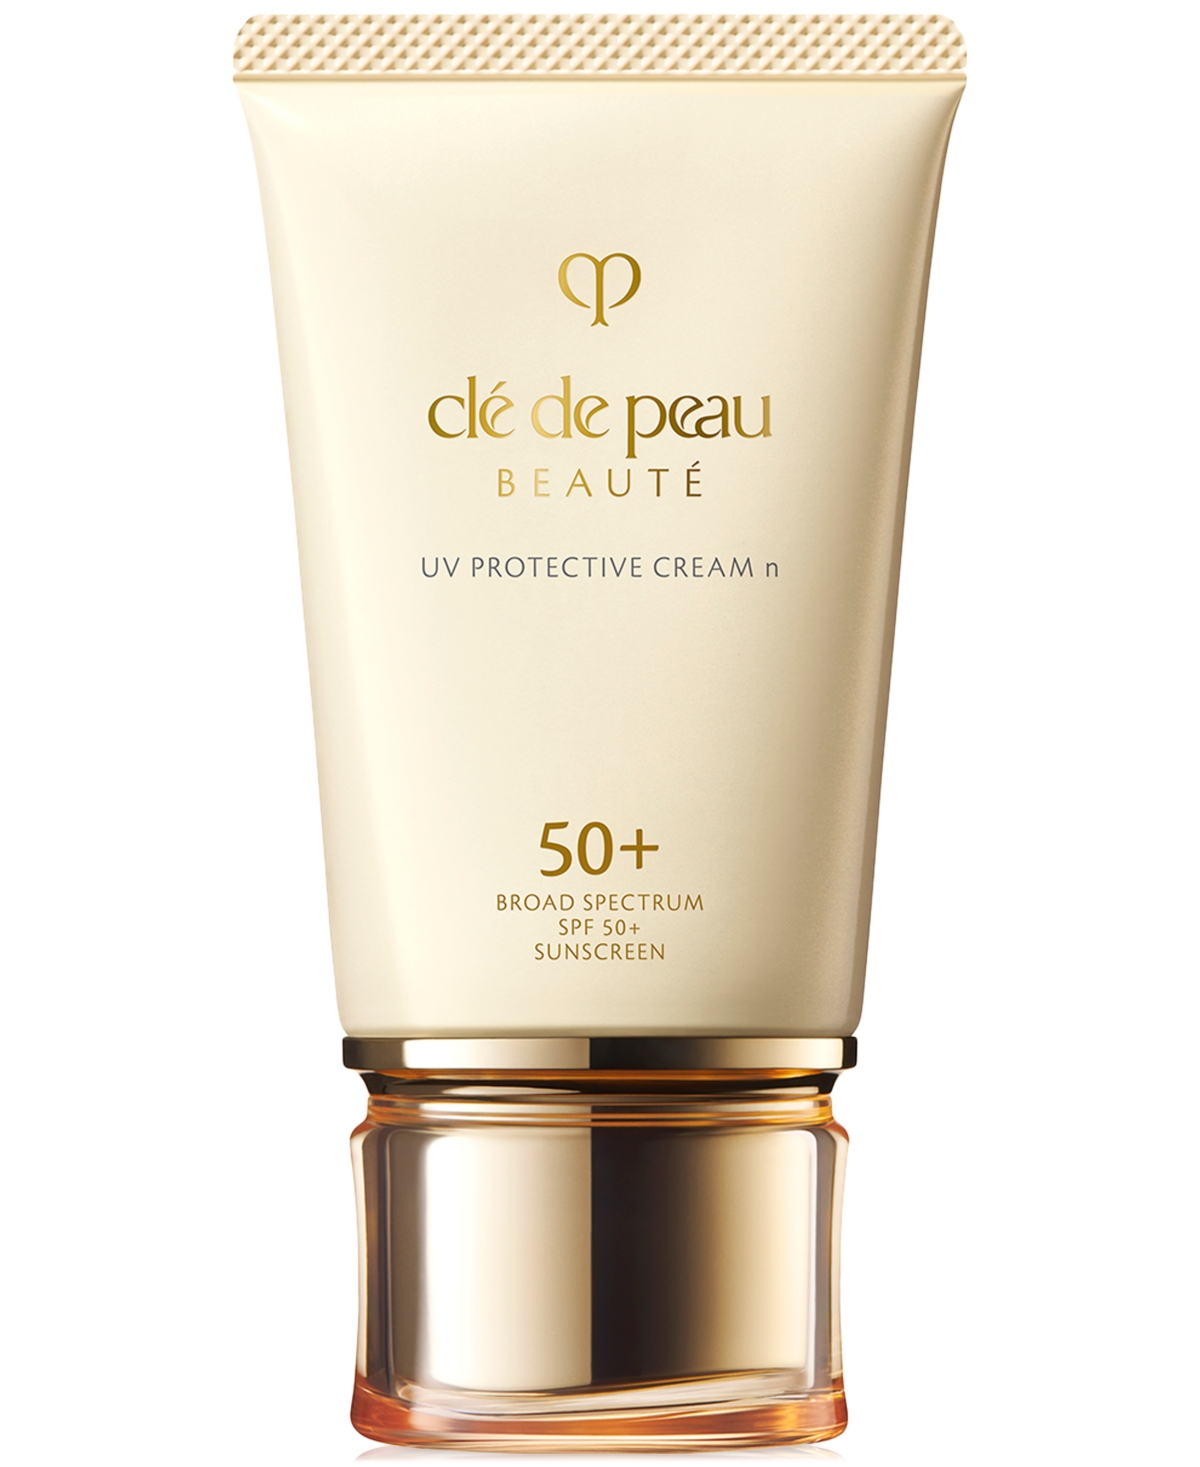 Cle de Peau Beaute Uv Protective Cream Spf 50+